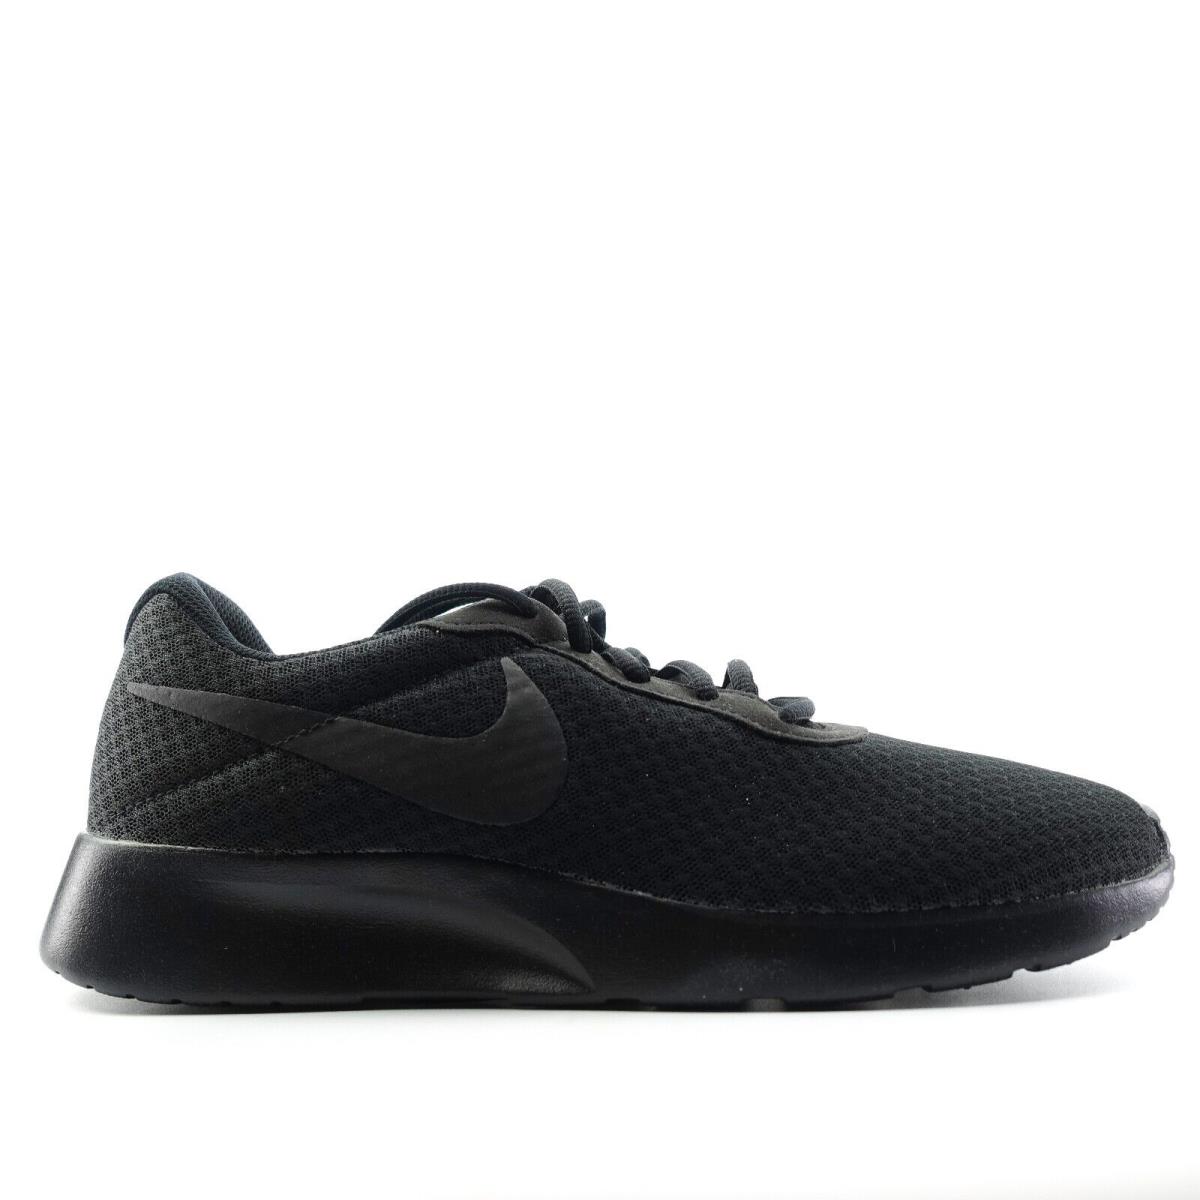 Womens Nike Tanjun Triple Black Running Shoe 812655 002 Size 10.5